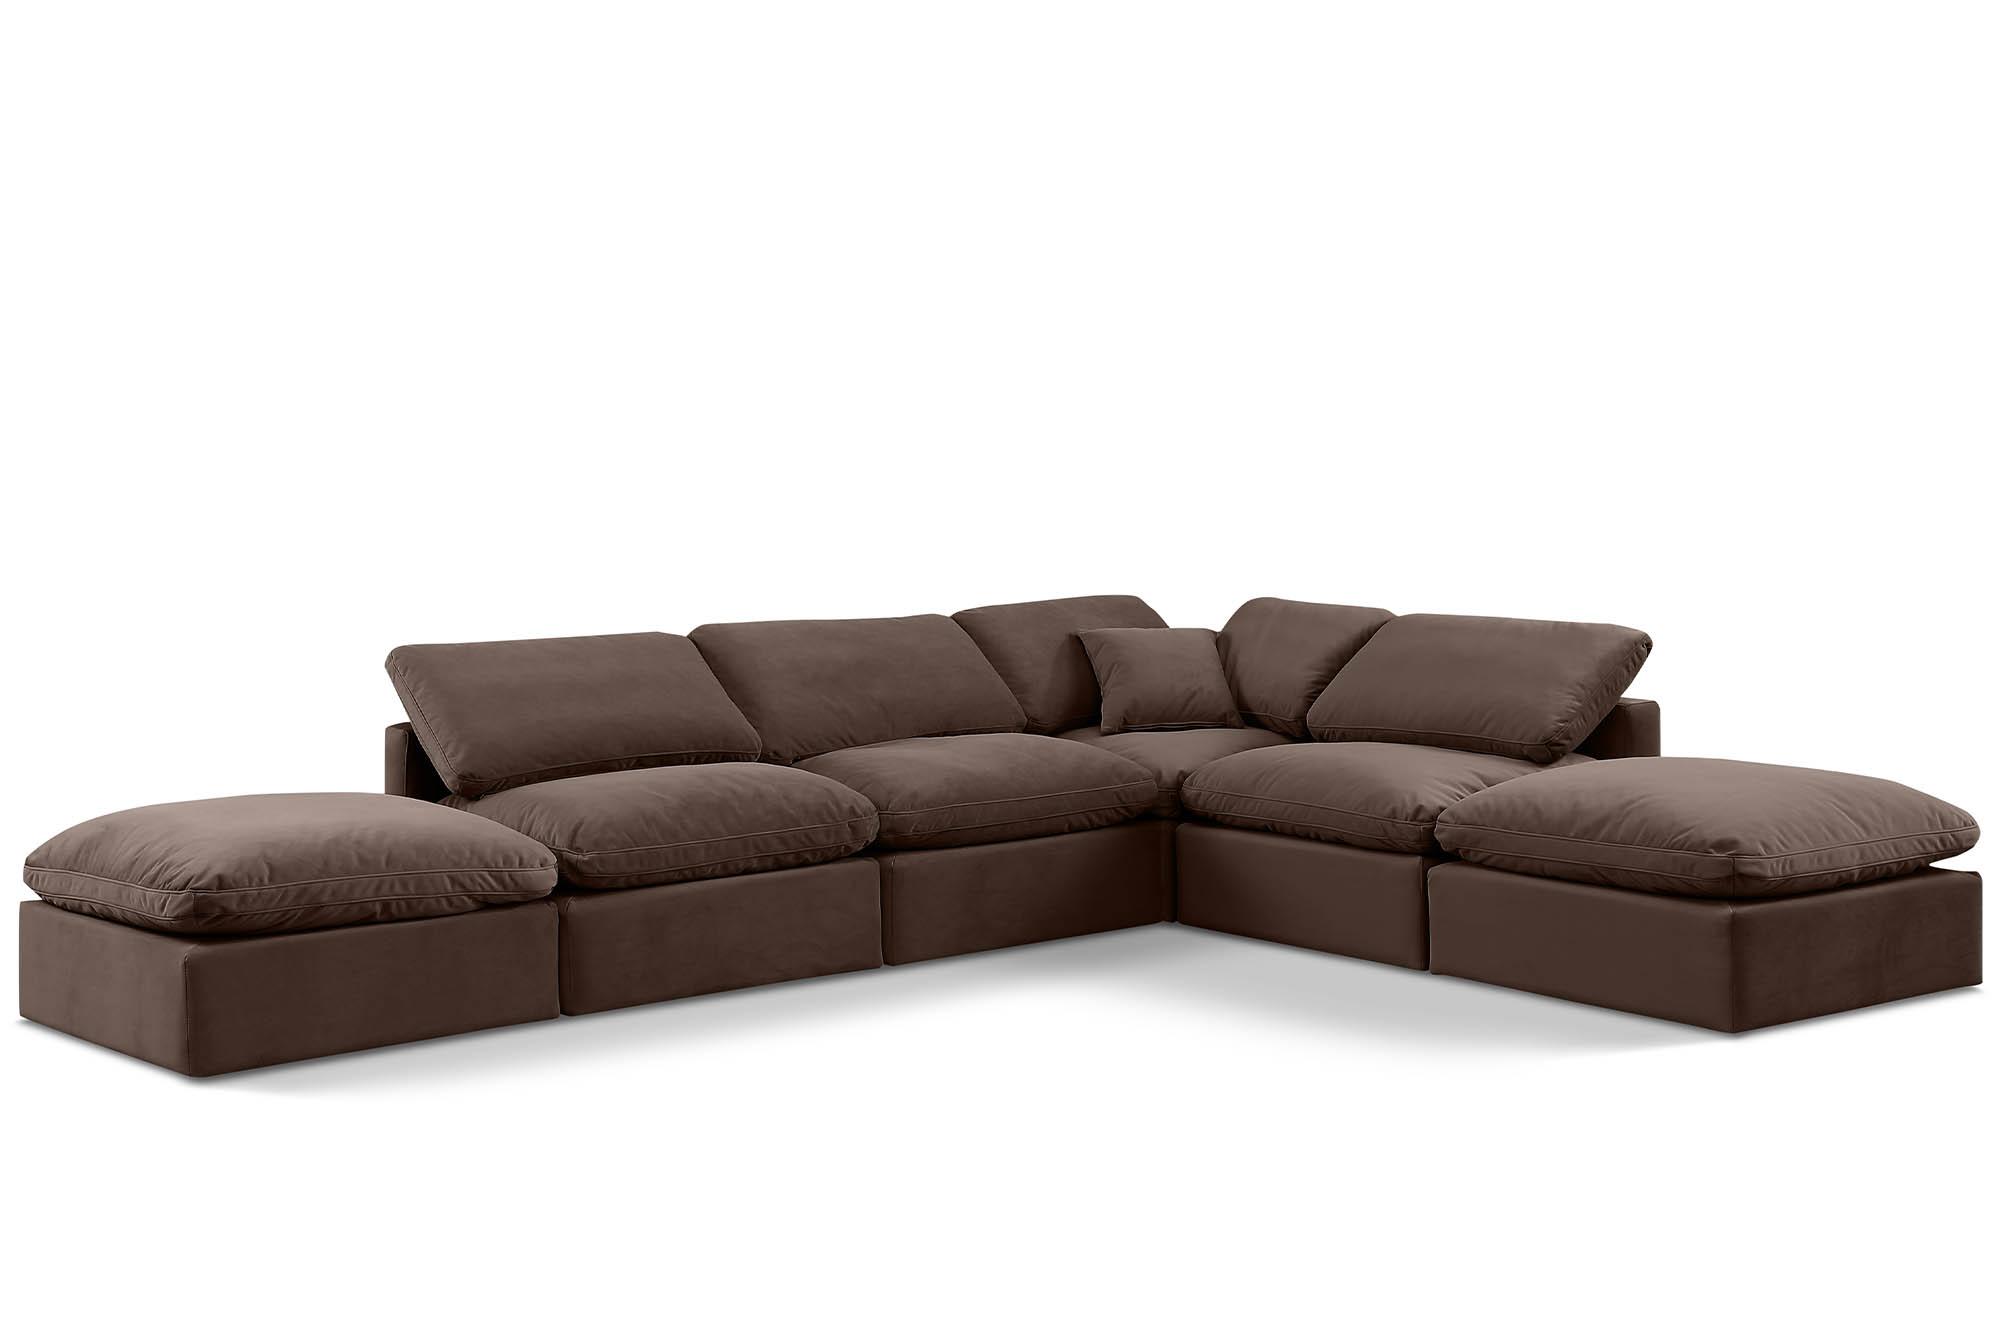 Contemporary, Modern Modular Sectional Sofa INDULGE 147Brown-Sec6E 147Brown-Sec6E in Brown Velvet